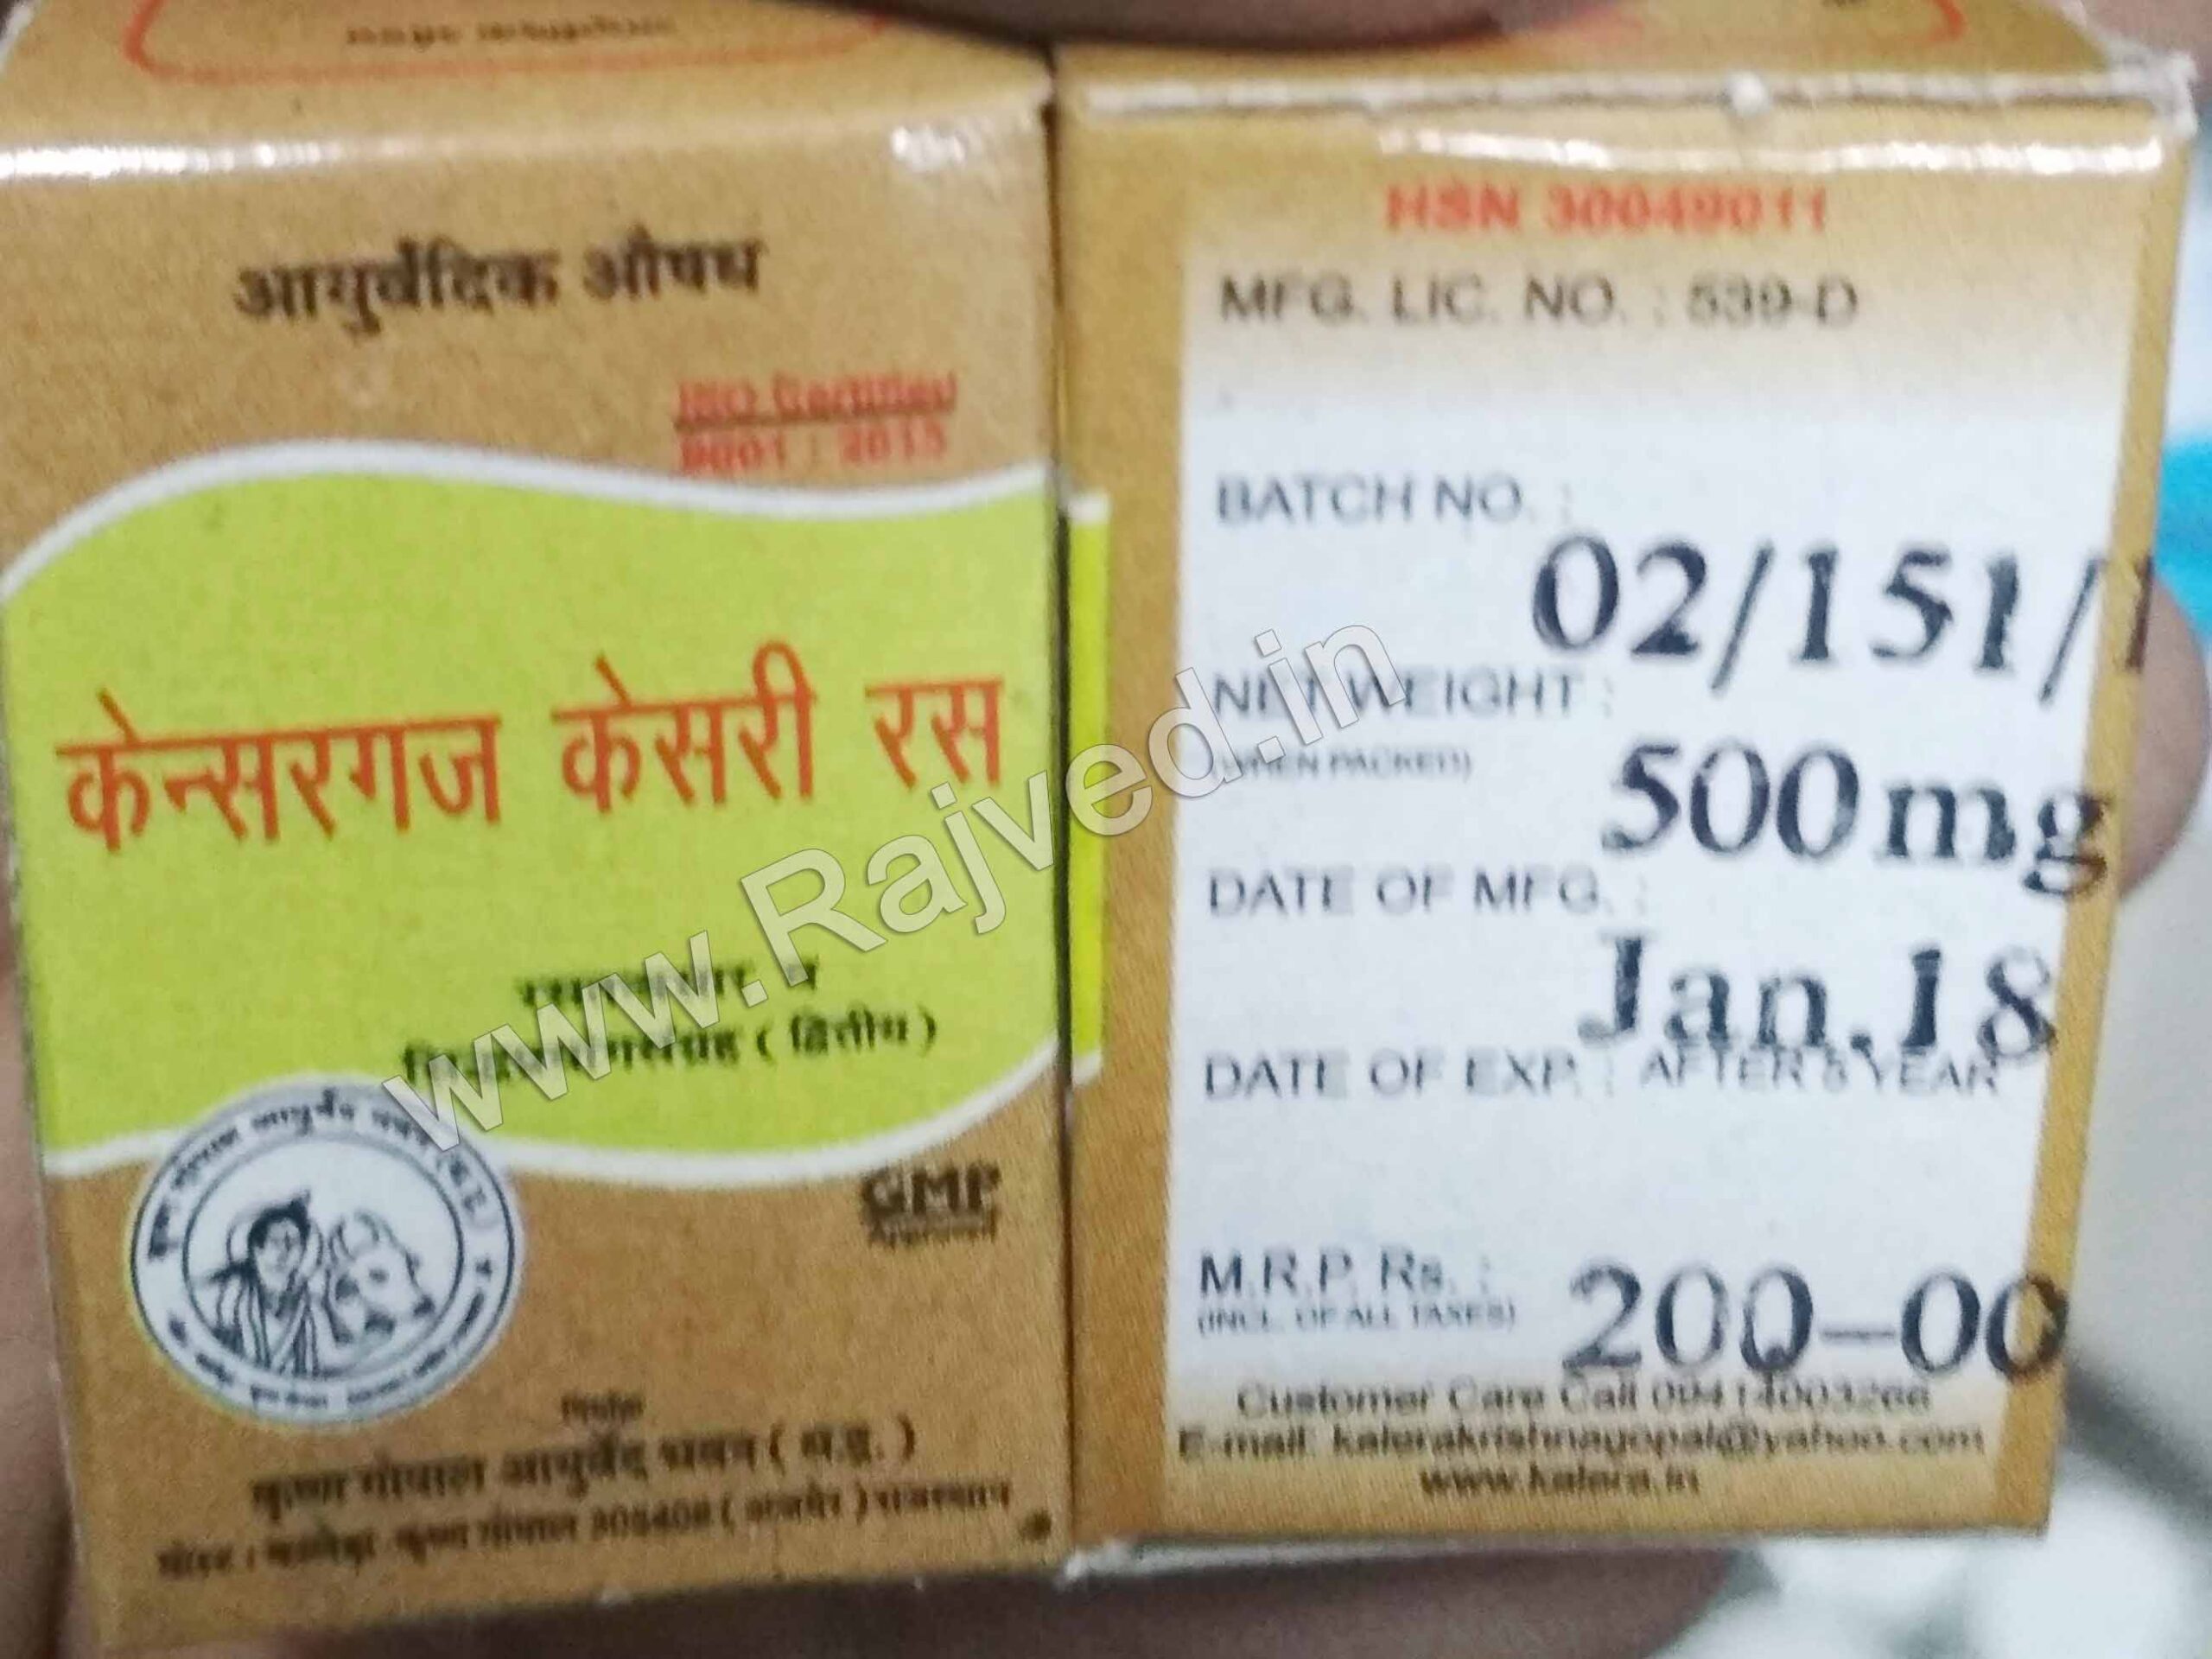 Kensargaj Kesari Ras 500 mg upto 20% off Krishna Gopal Ayurved bhavan